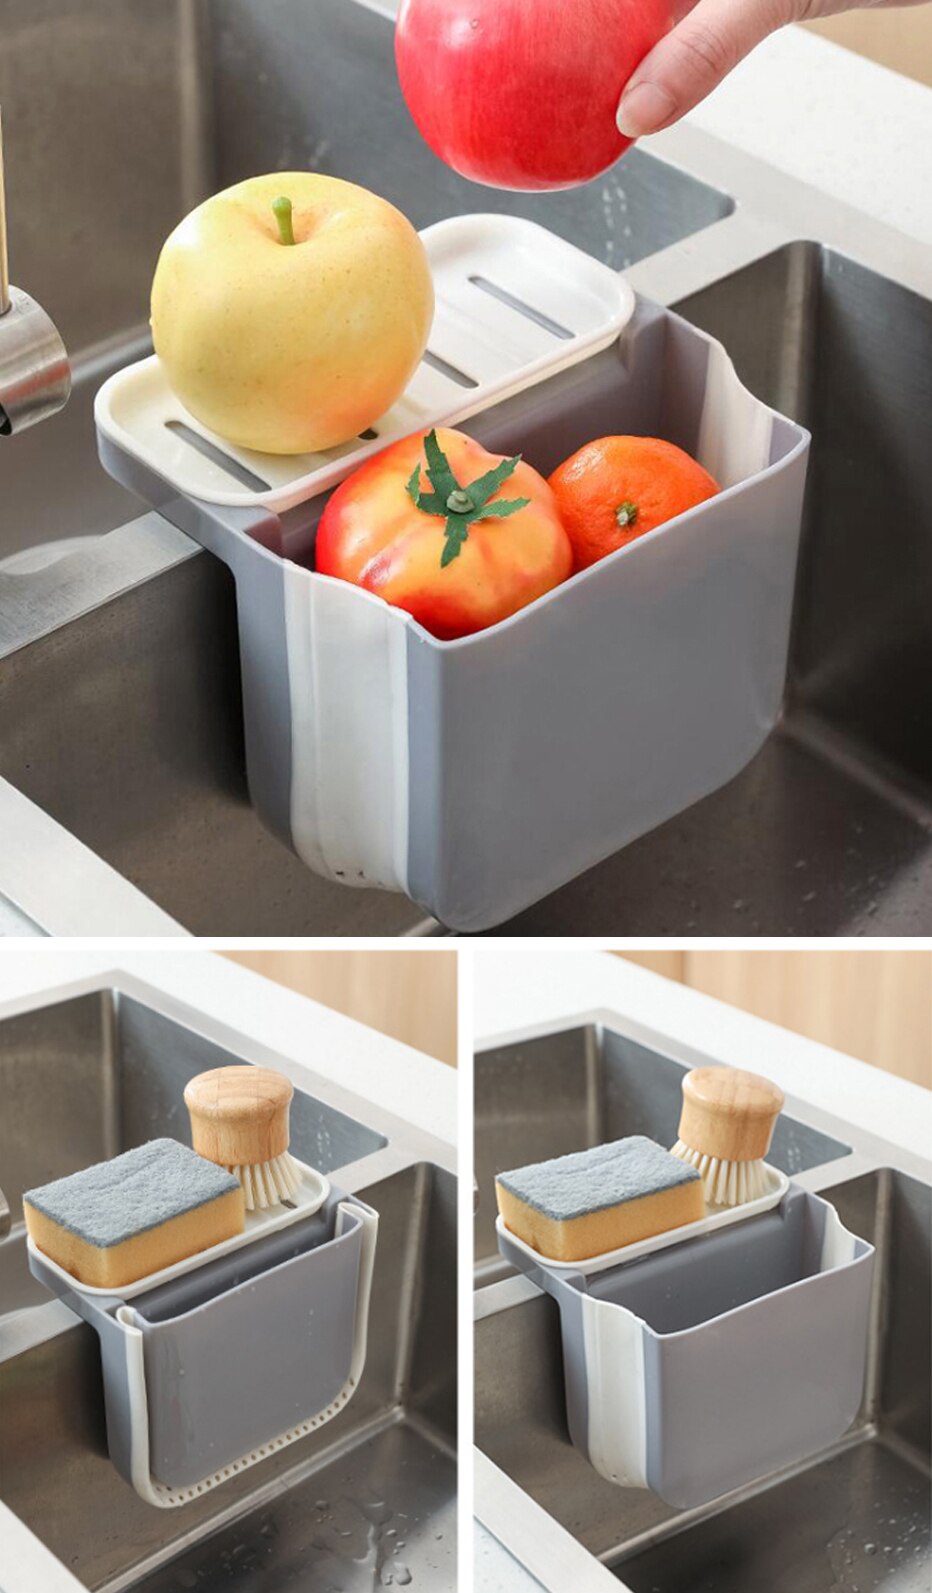 Foldable Sink Drain Basket